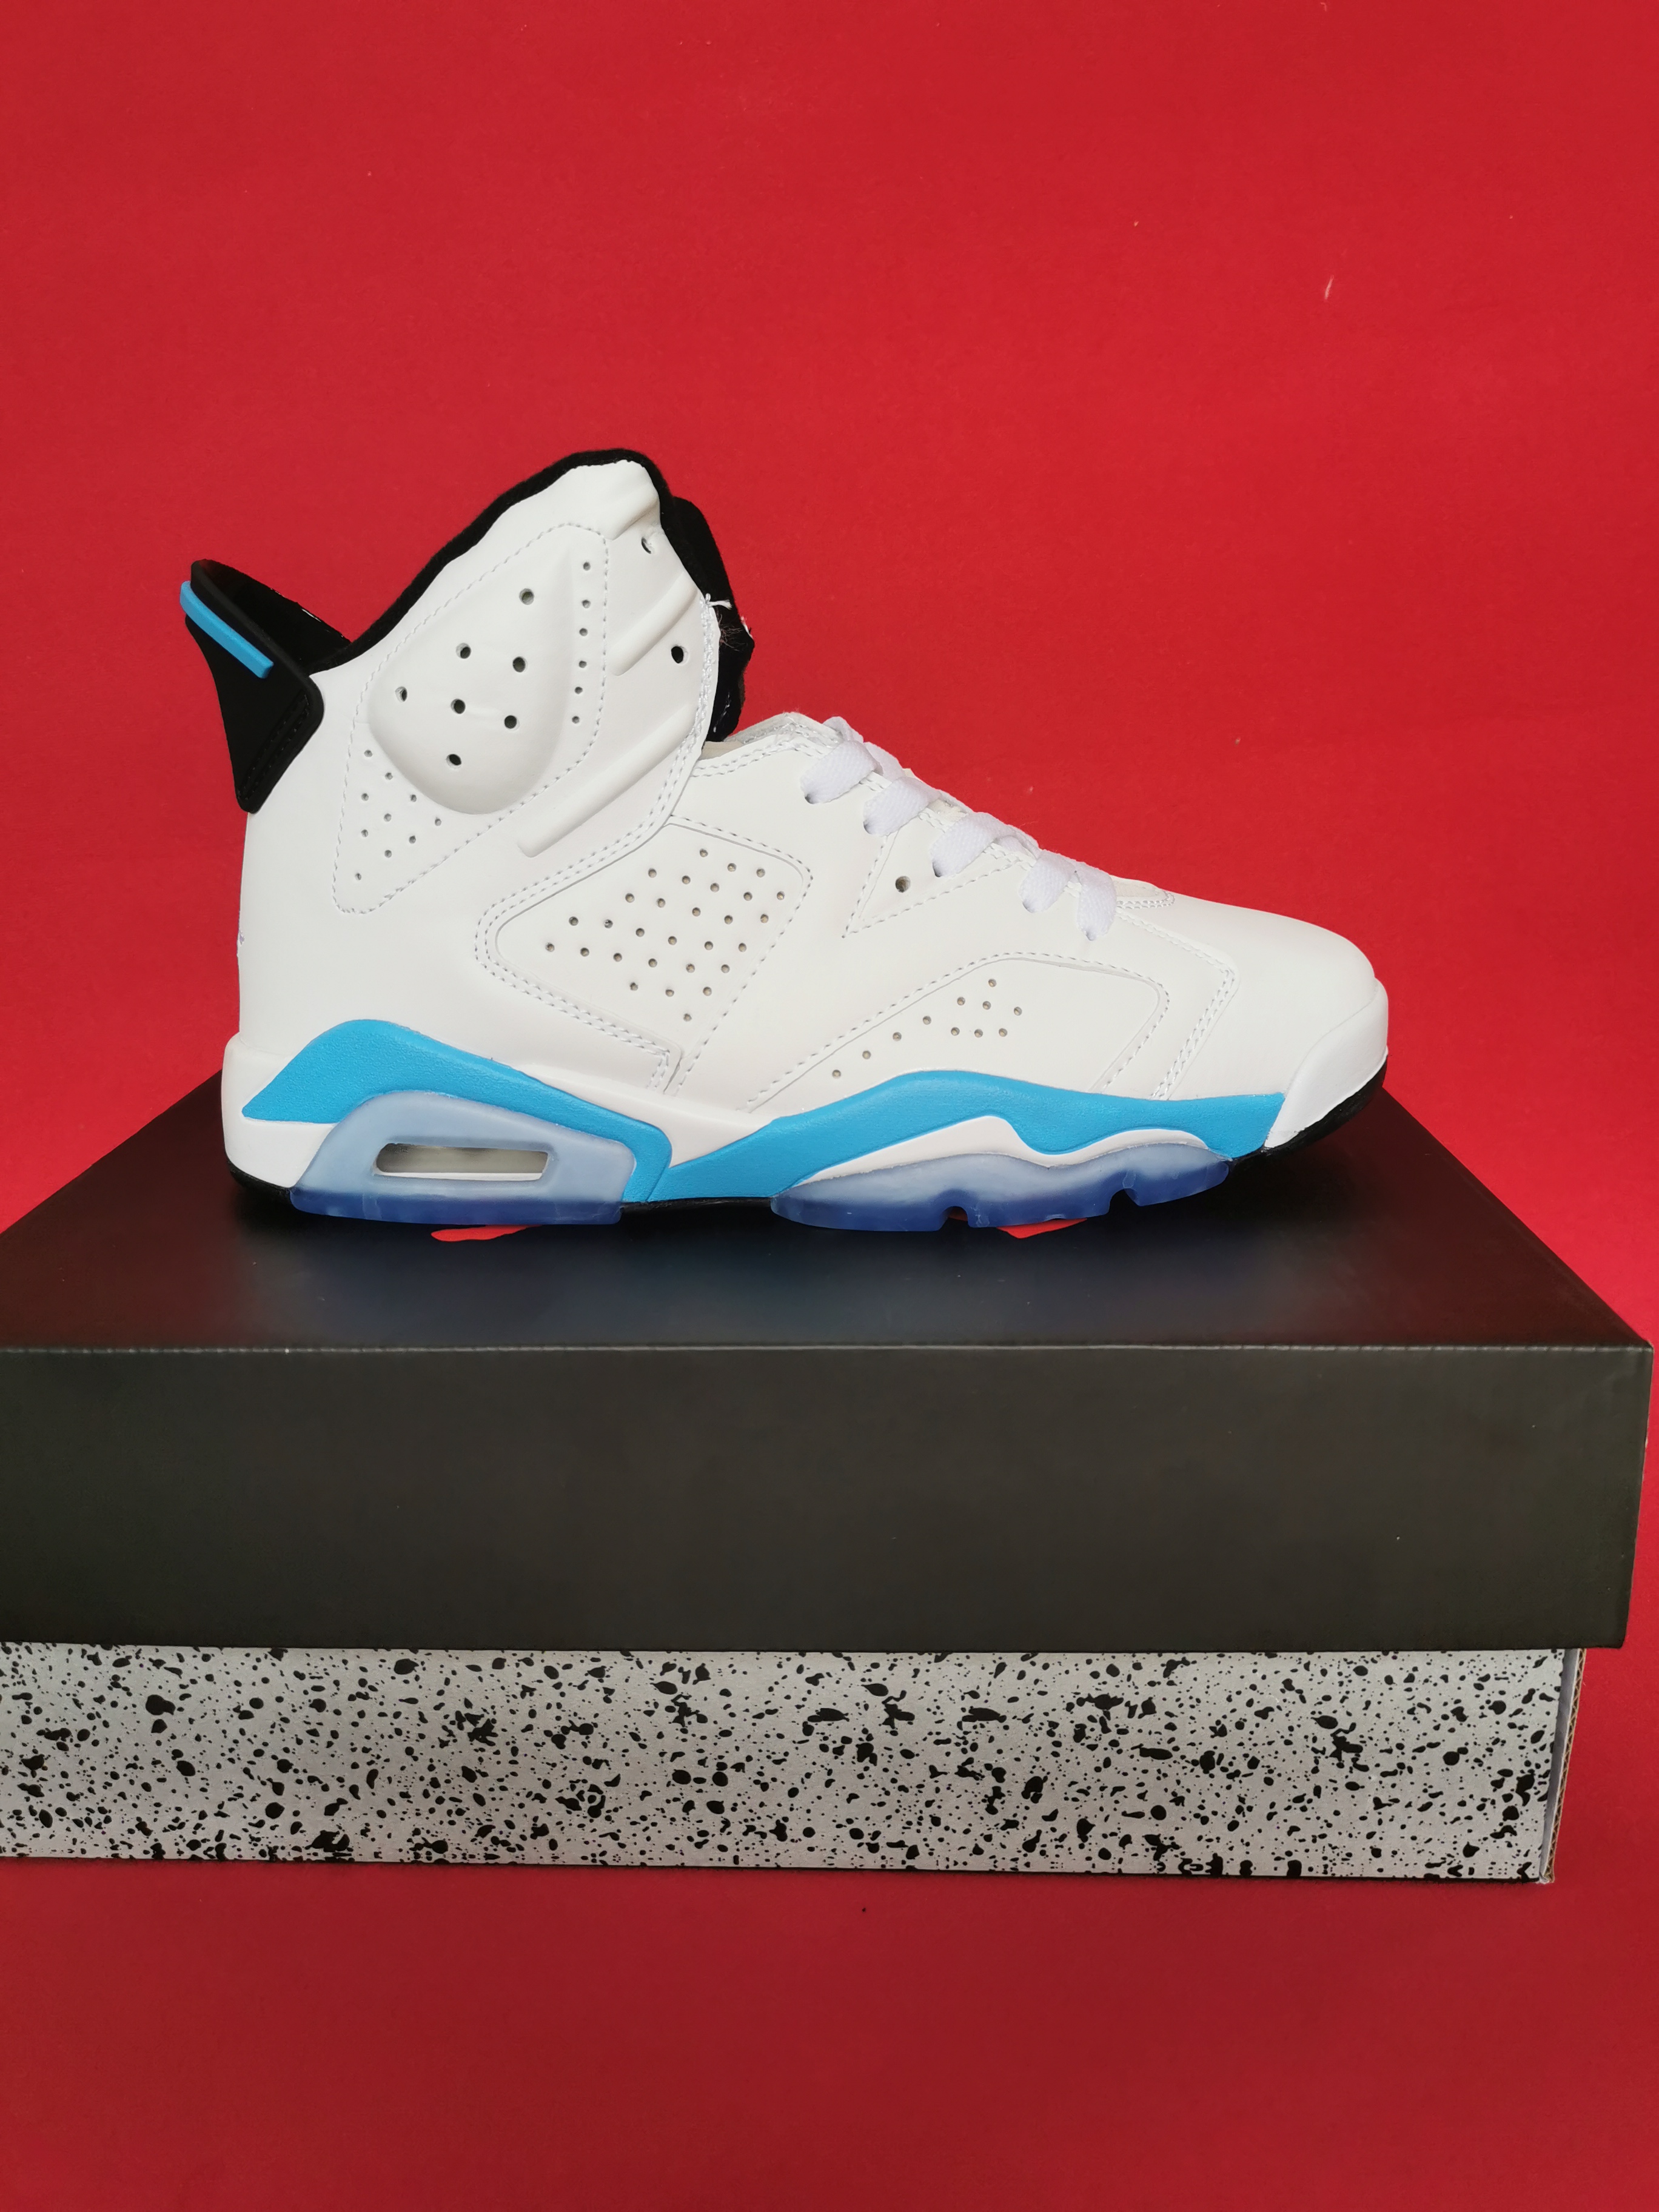 New Men Air Jordan 6 White Baby Blue Shoes